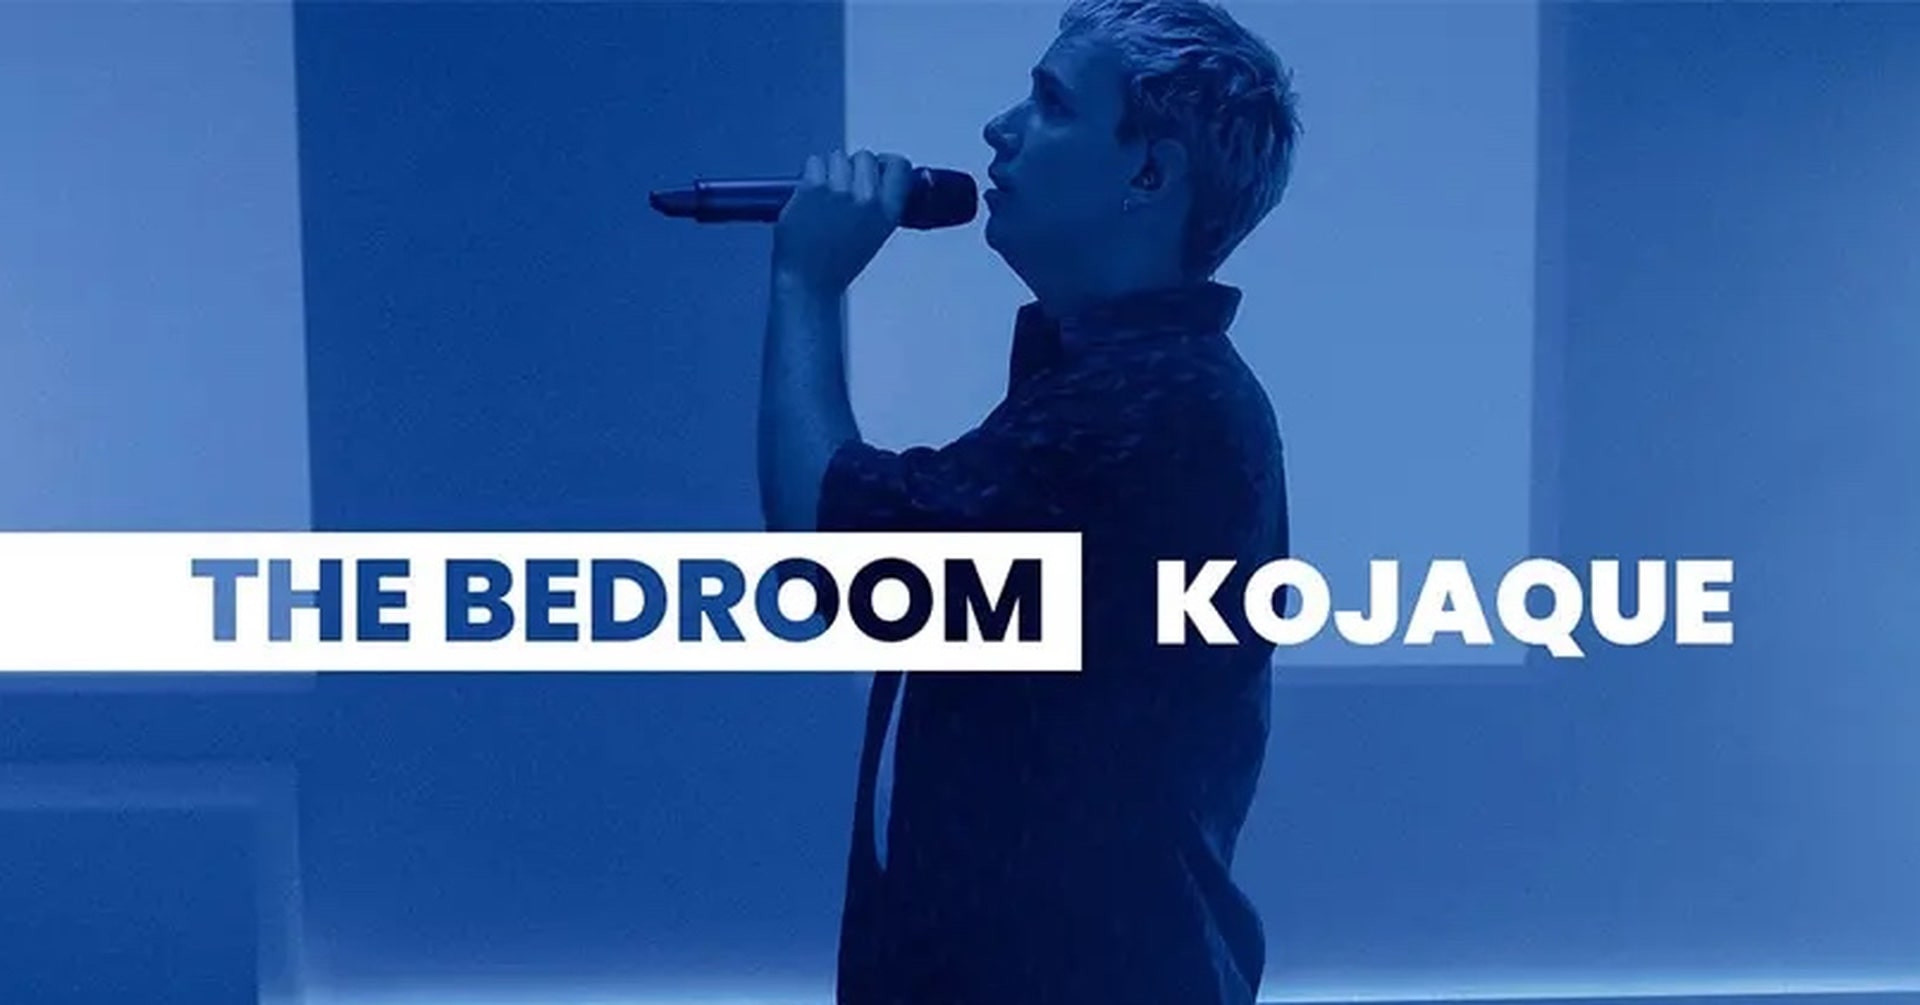 THE BEDROOM by Focusrite - epizod 3 już dostępny!